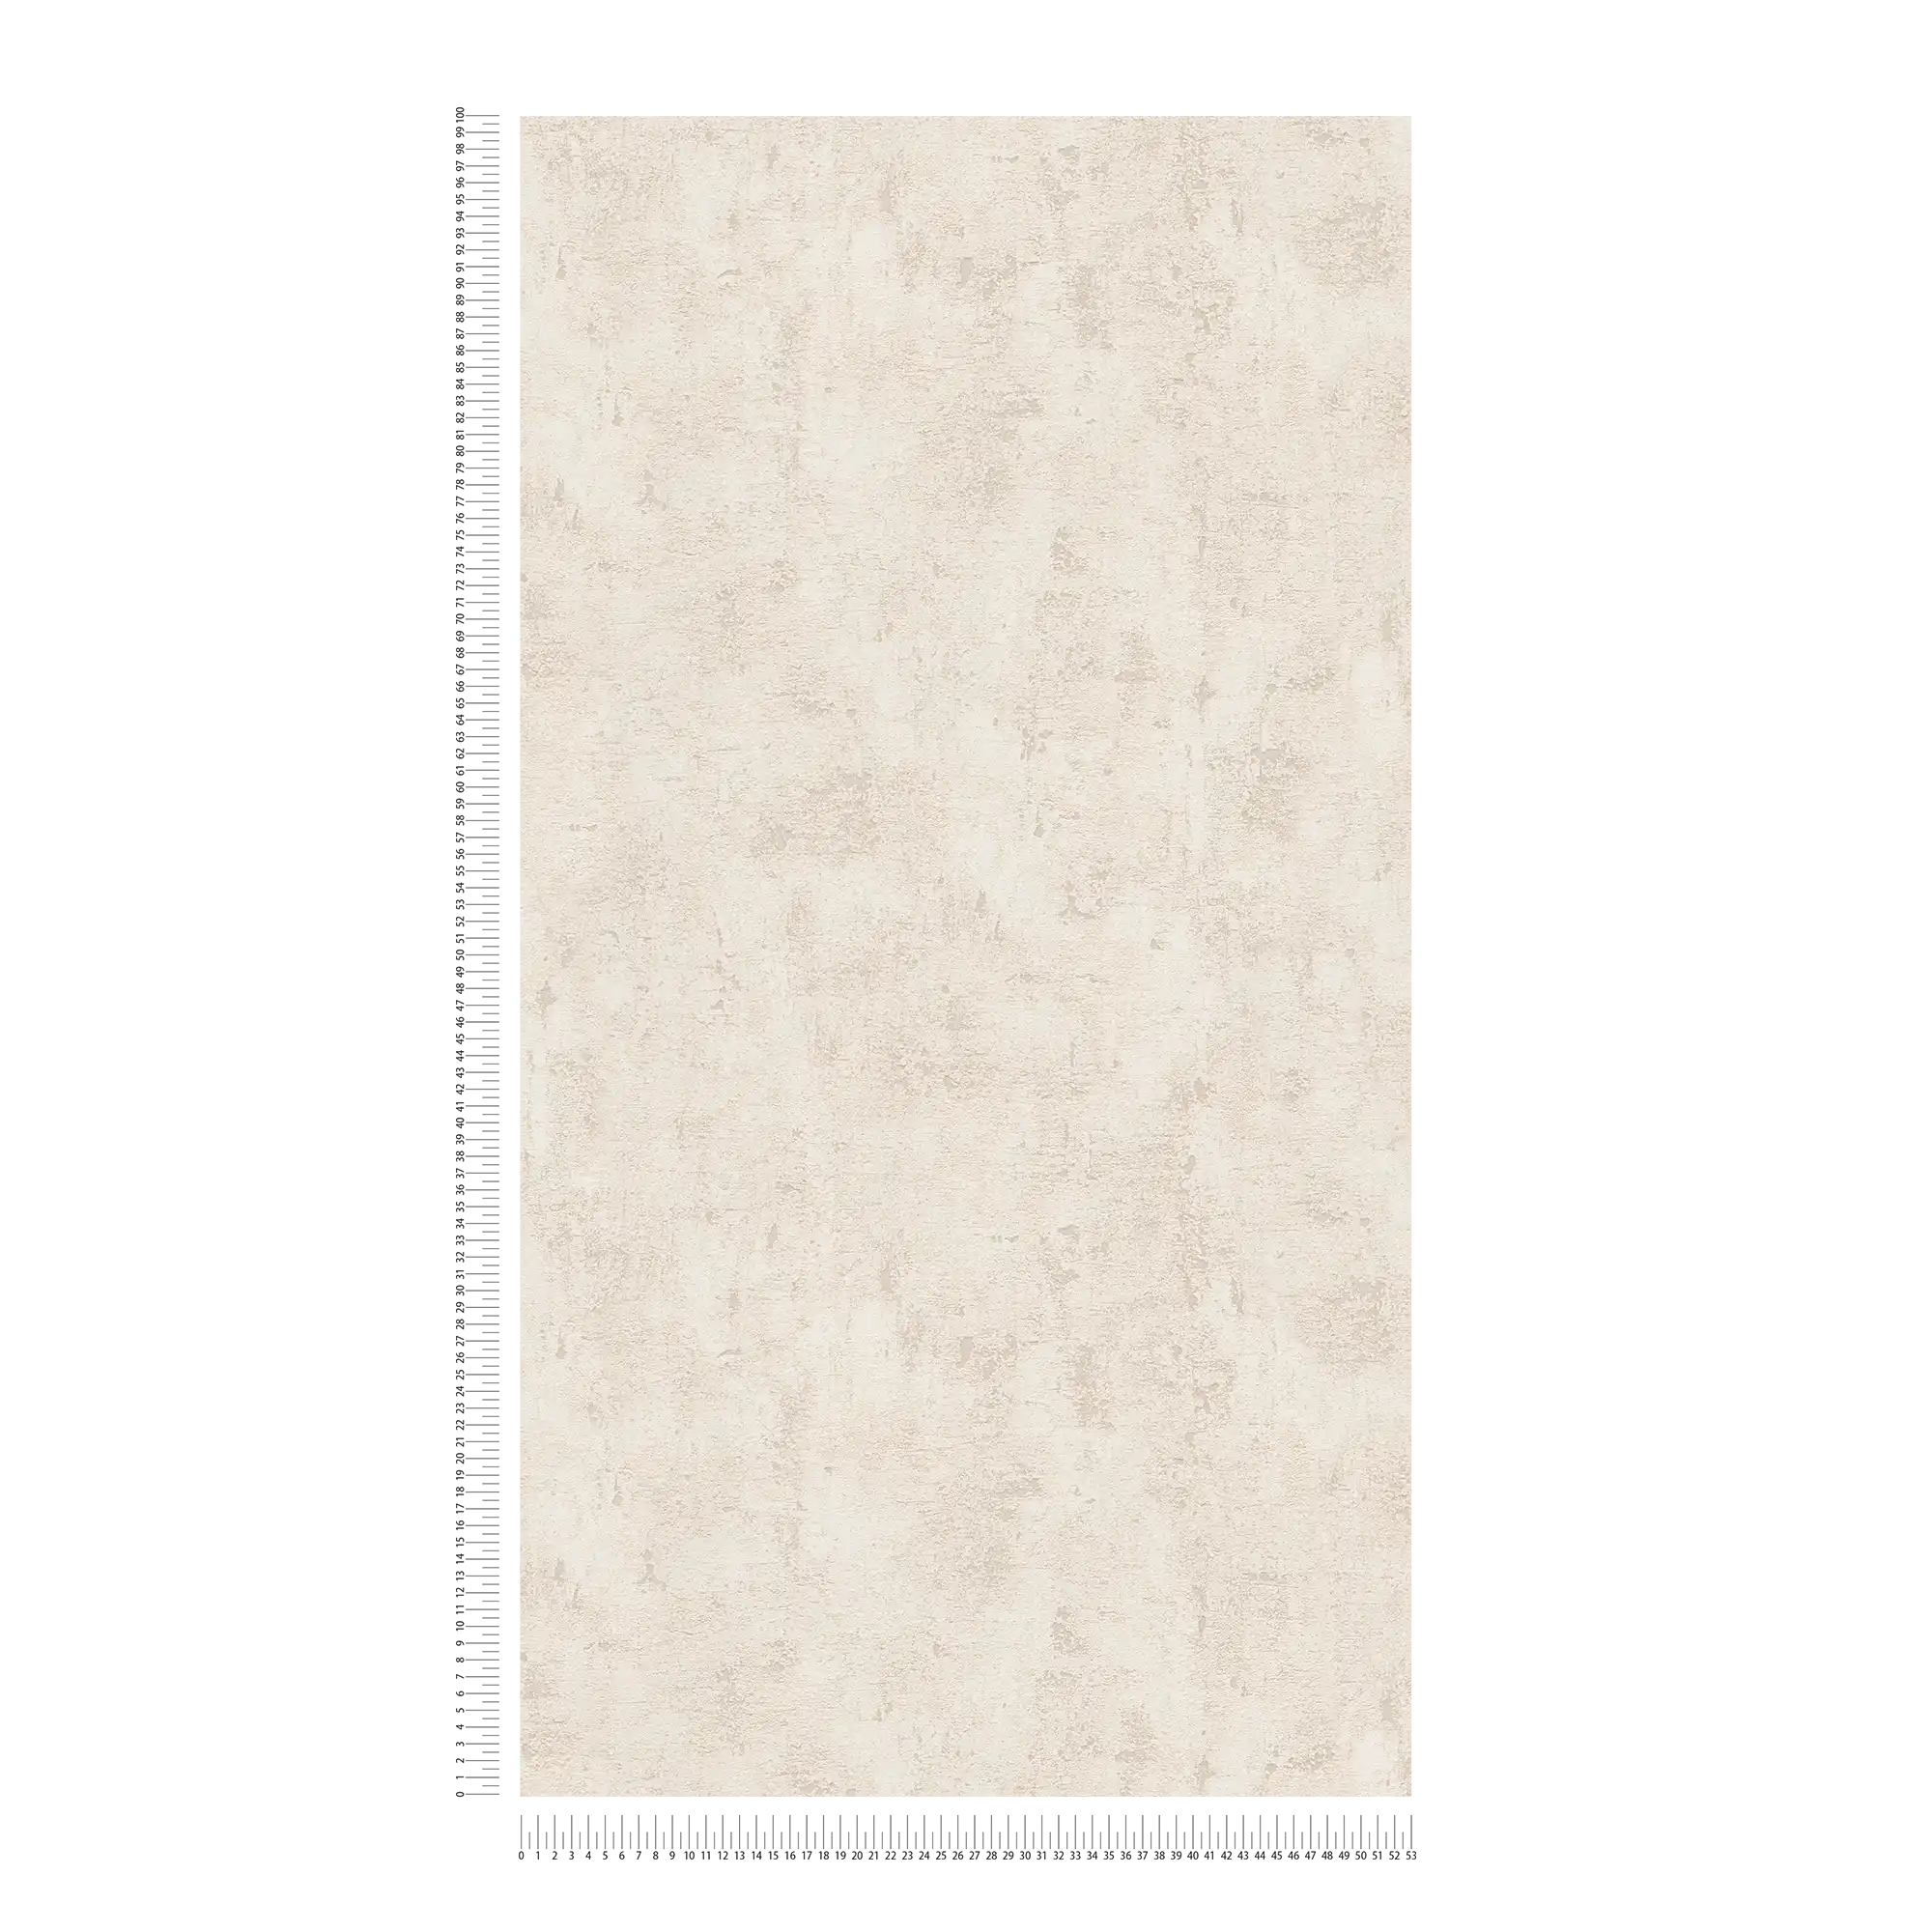             Pattern wallpaper with rustic plaster look - beige
        